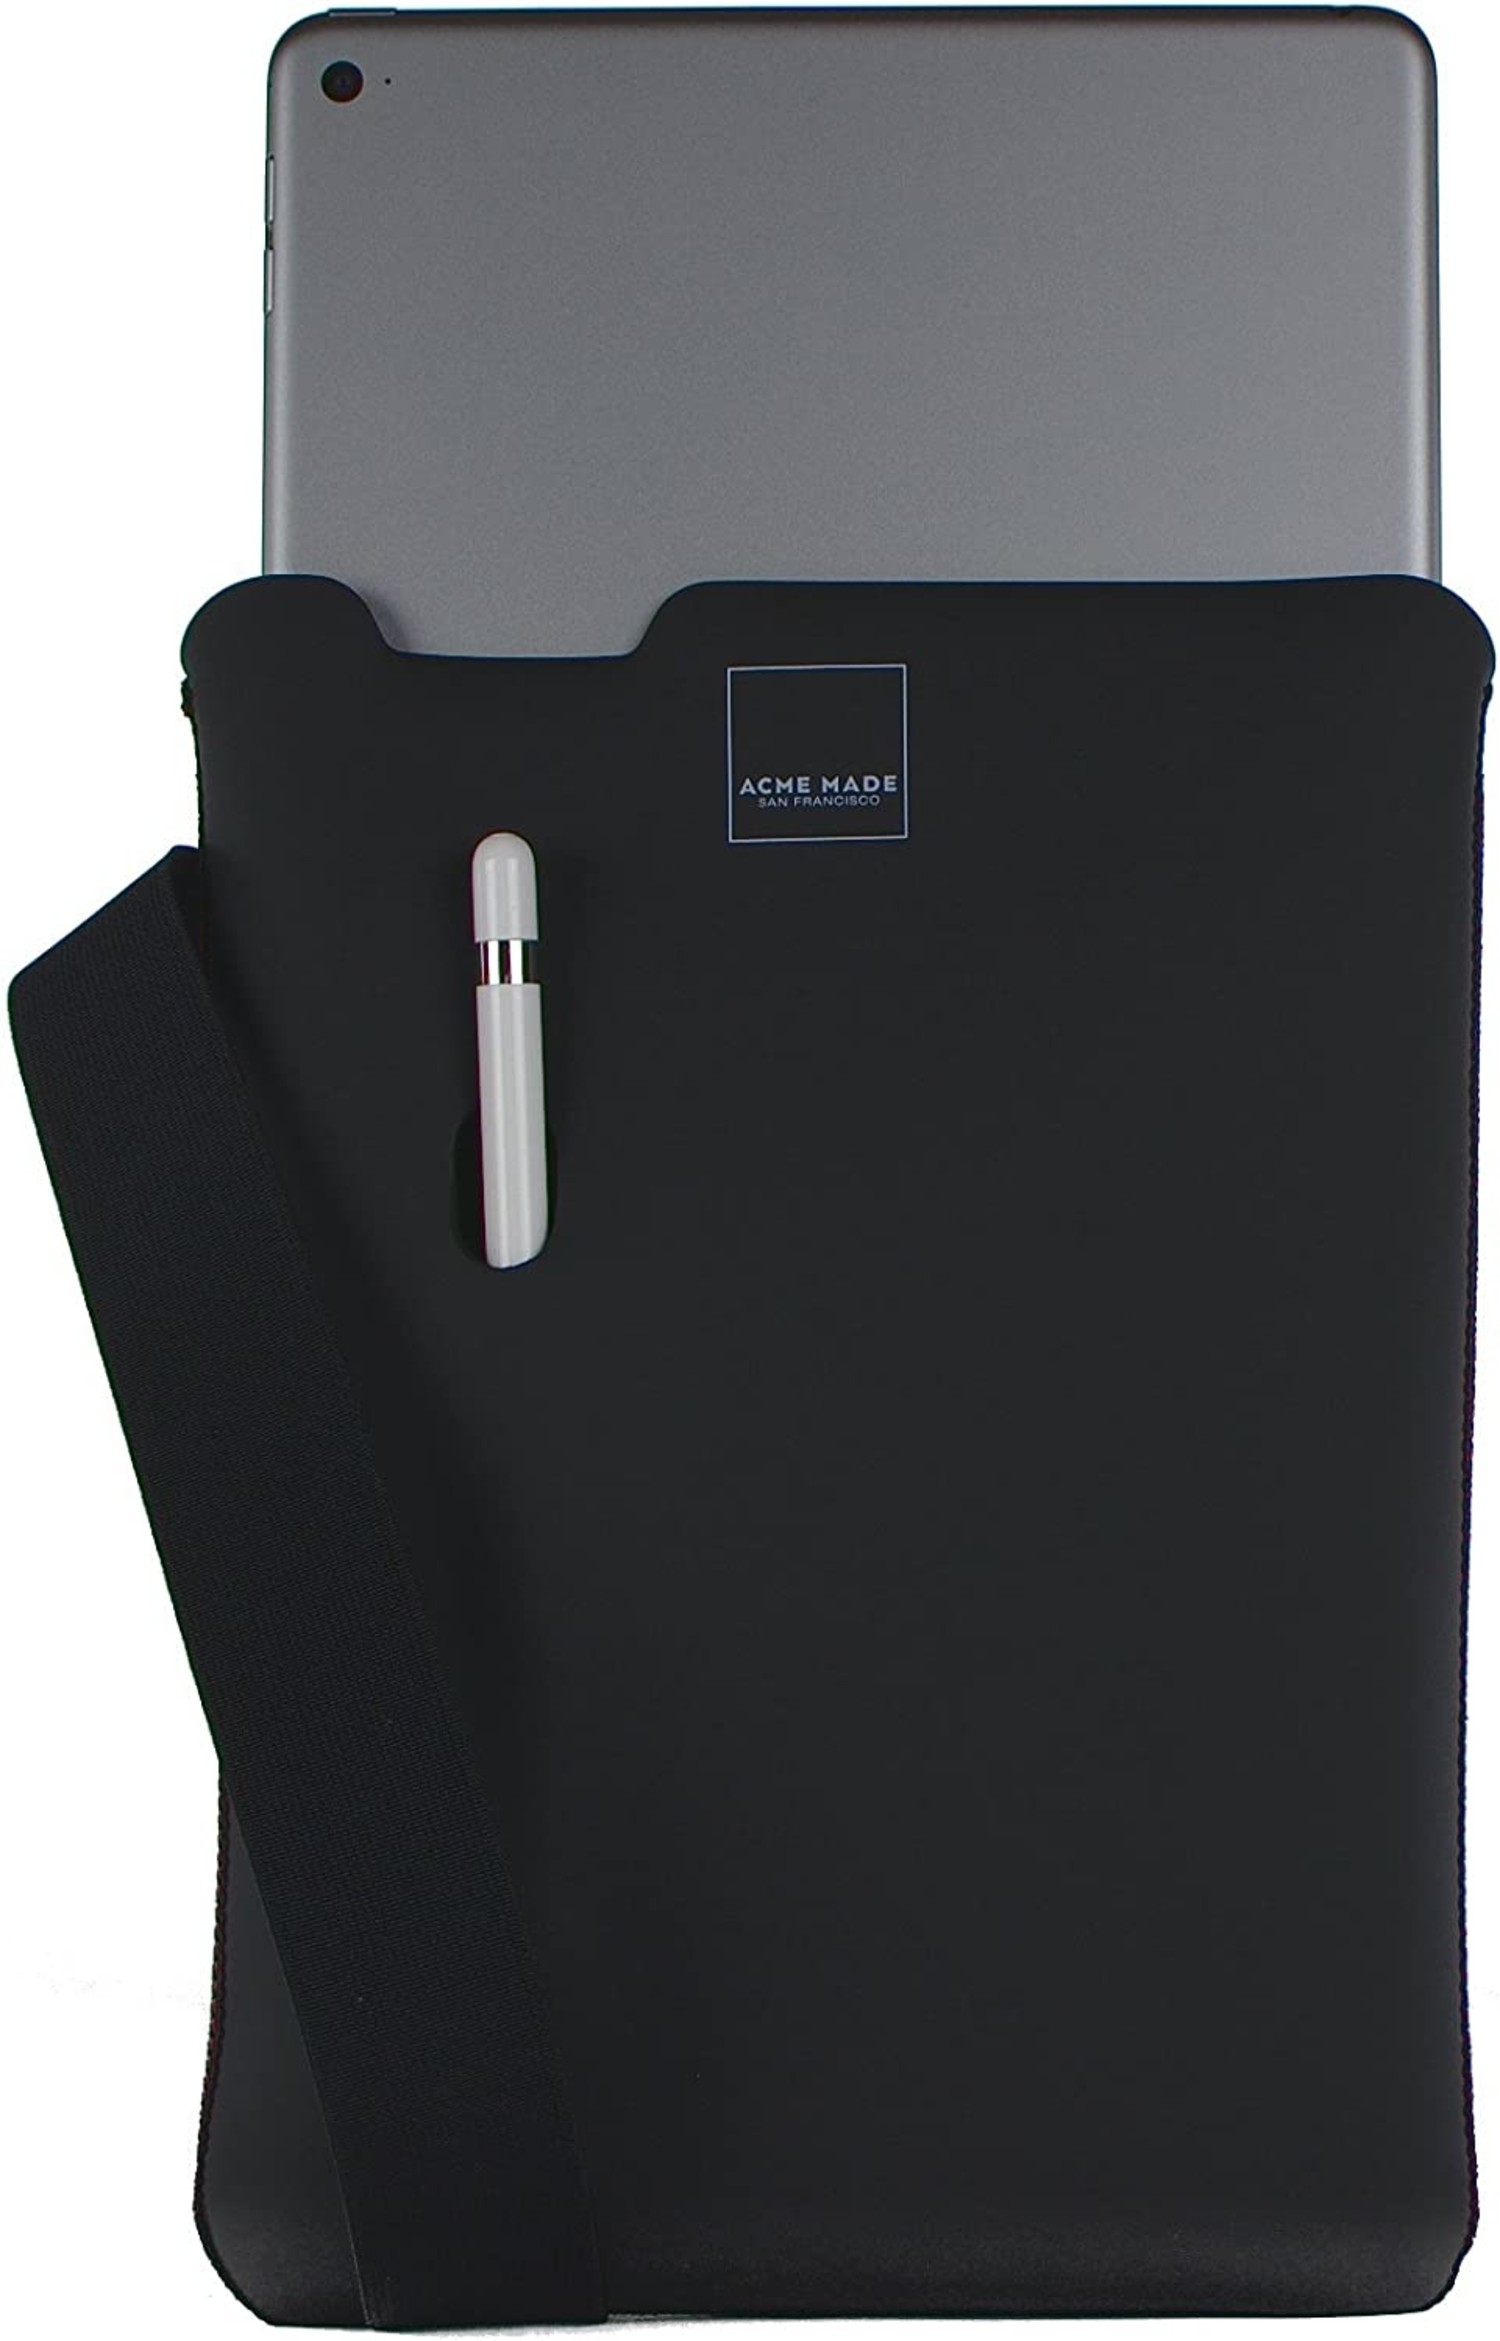 iPad protection Miky - Authentic iPad sleeve